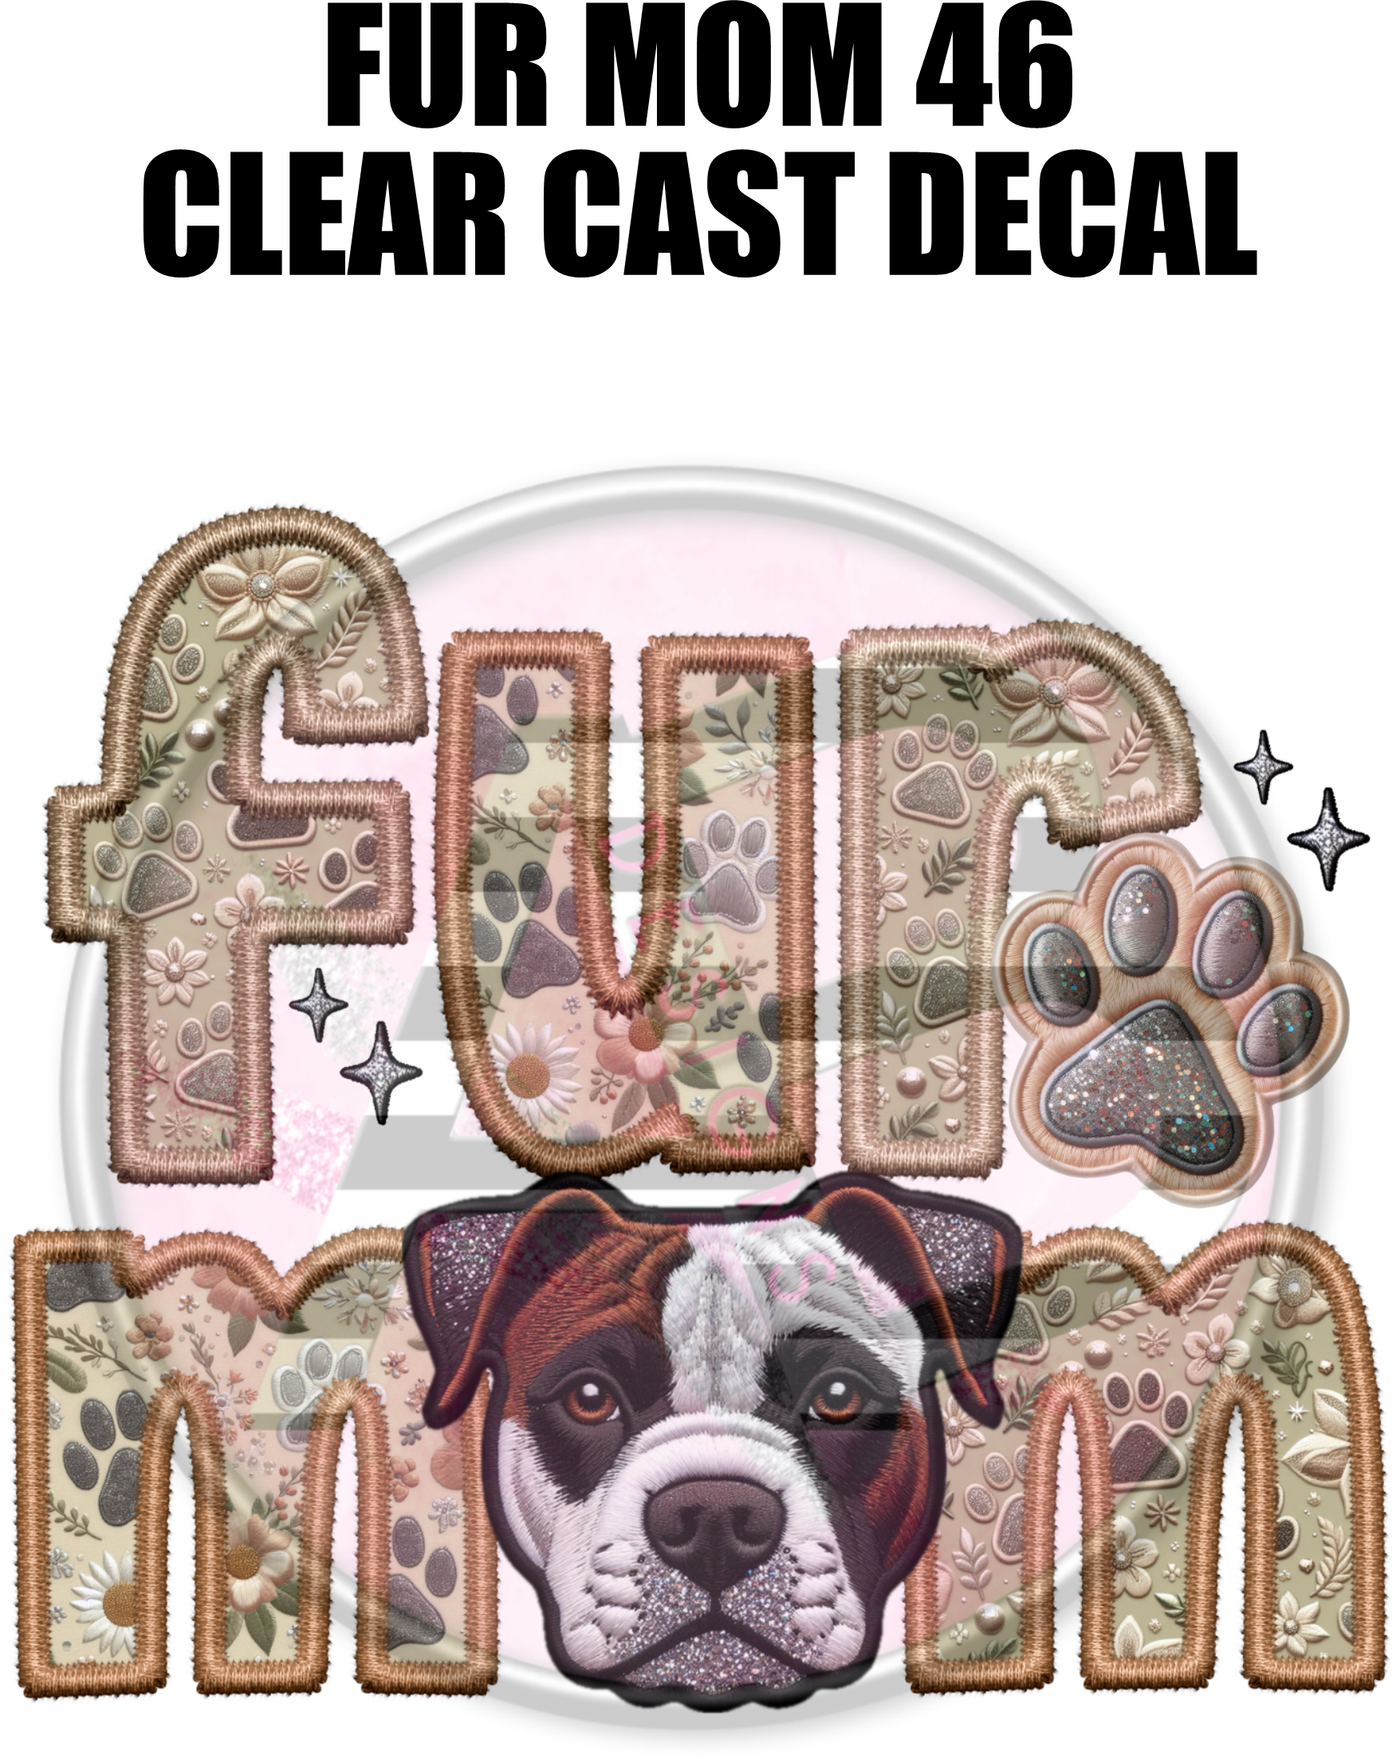 Fur Mom 46 - Clear Cast Decal